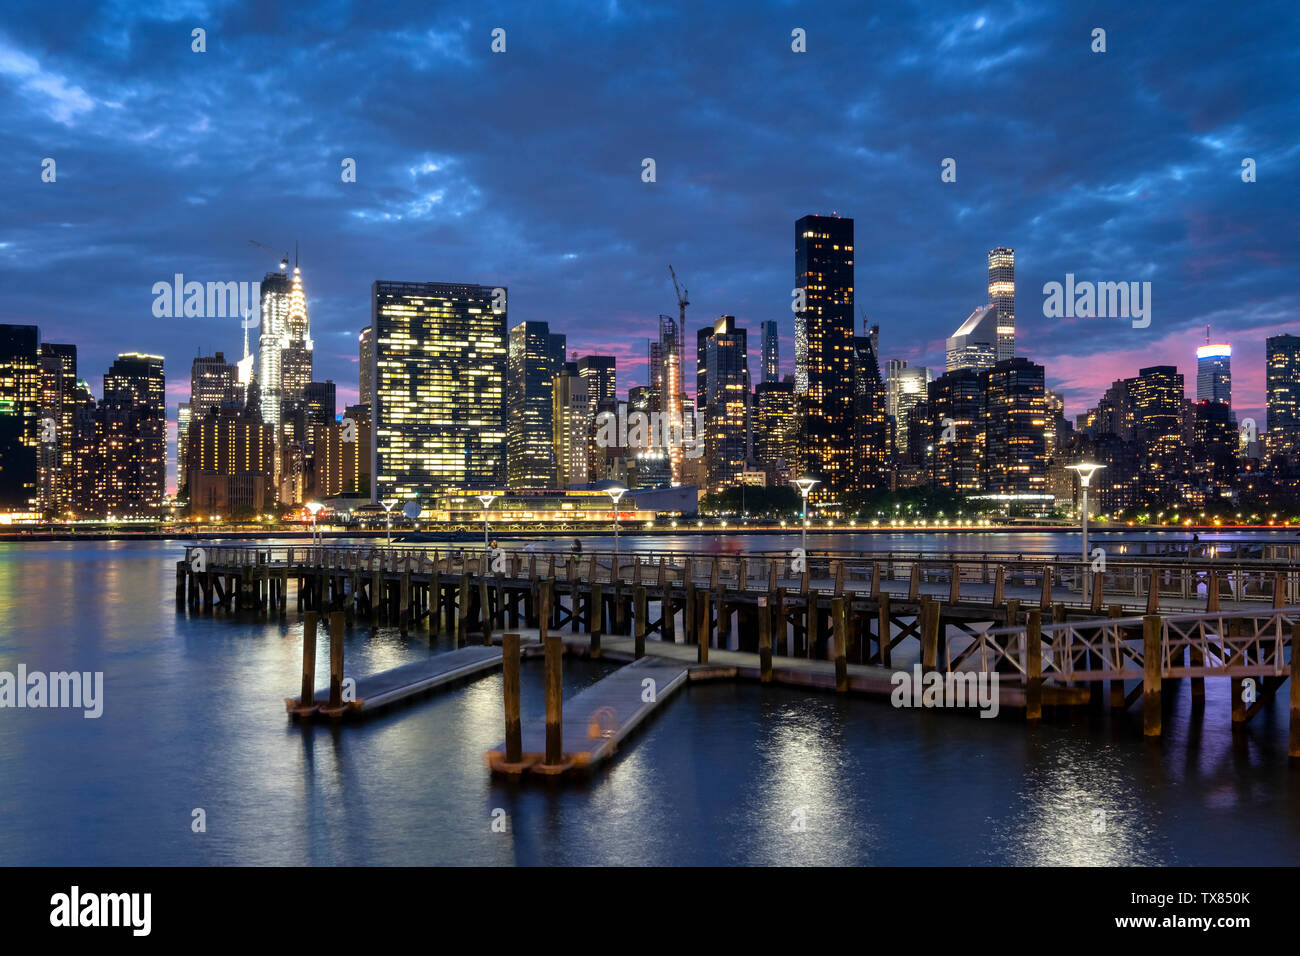 Manhattan Skyline Gantry Plaza State Park Pier at night, New York, USA Banque D'Images